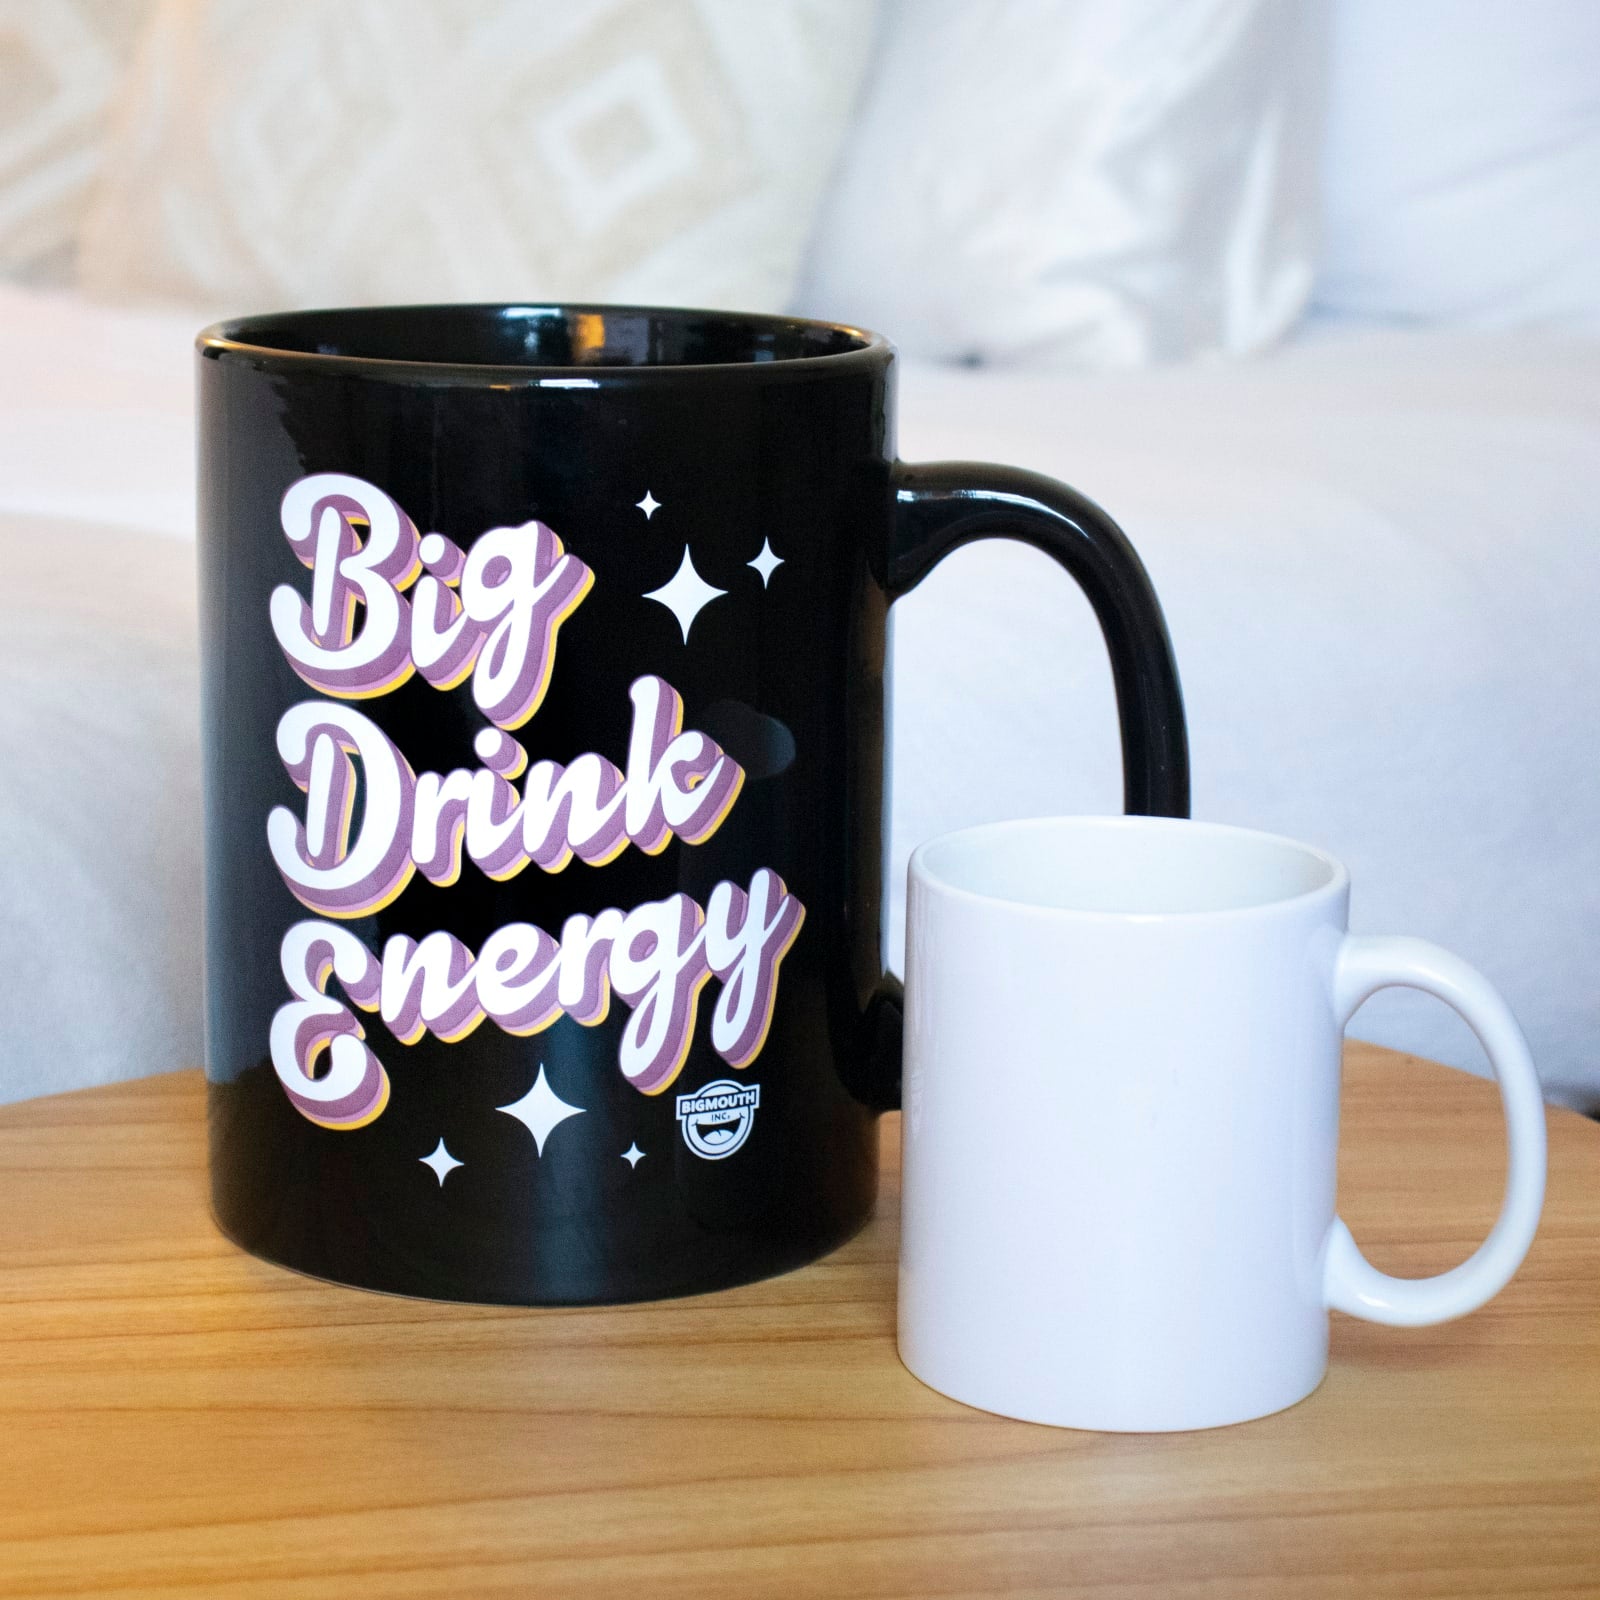  BigMouth Inc. Extra Large Coffee Mug 64 Oz - Giant Coffee Mugs  for Coffee Lovers - Sturdy Tall Ceramic Coffee Cups - Big Cup for Coffee,  Tea - Microwave Safe 